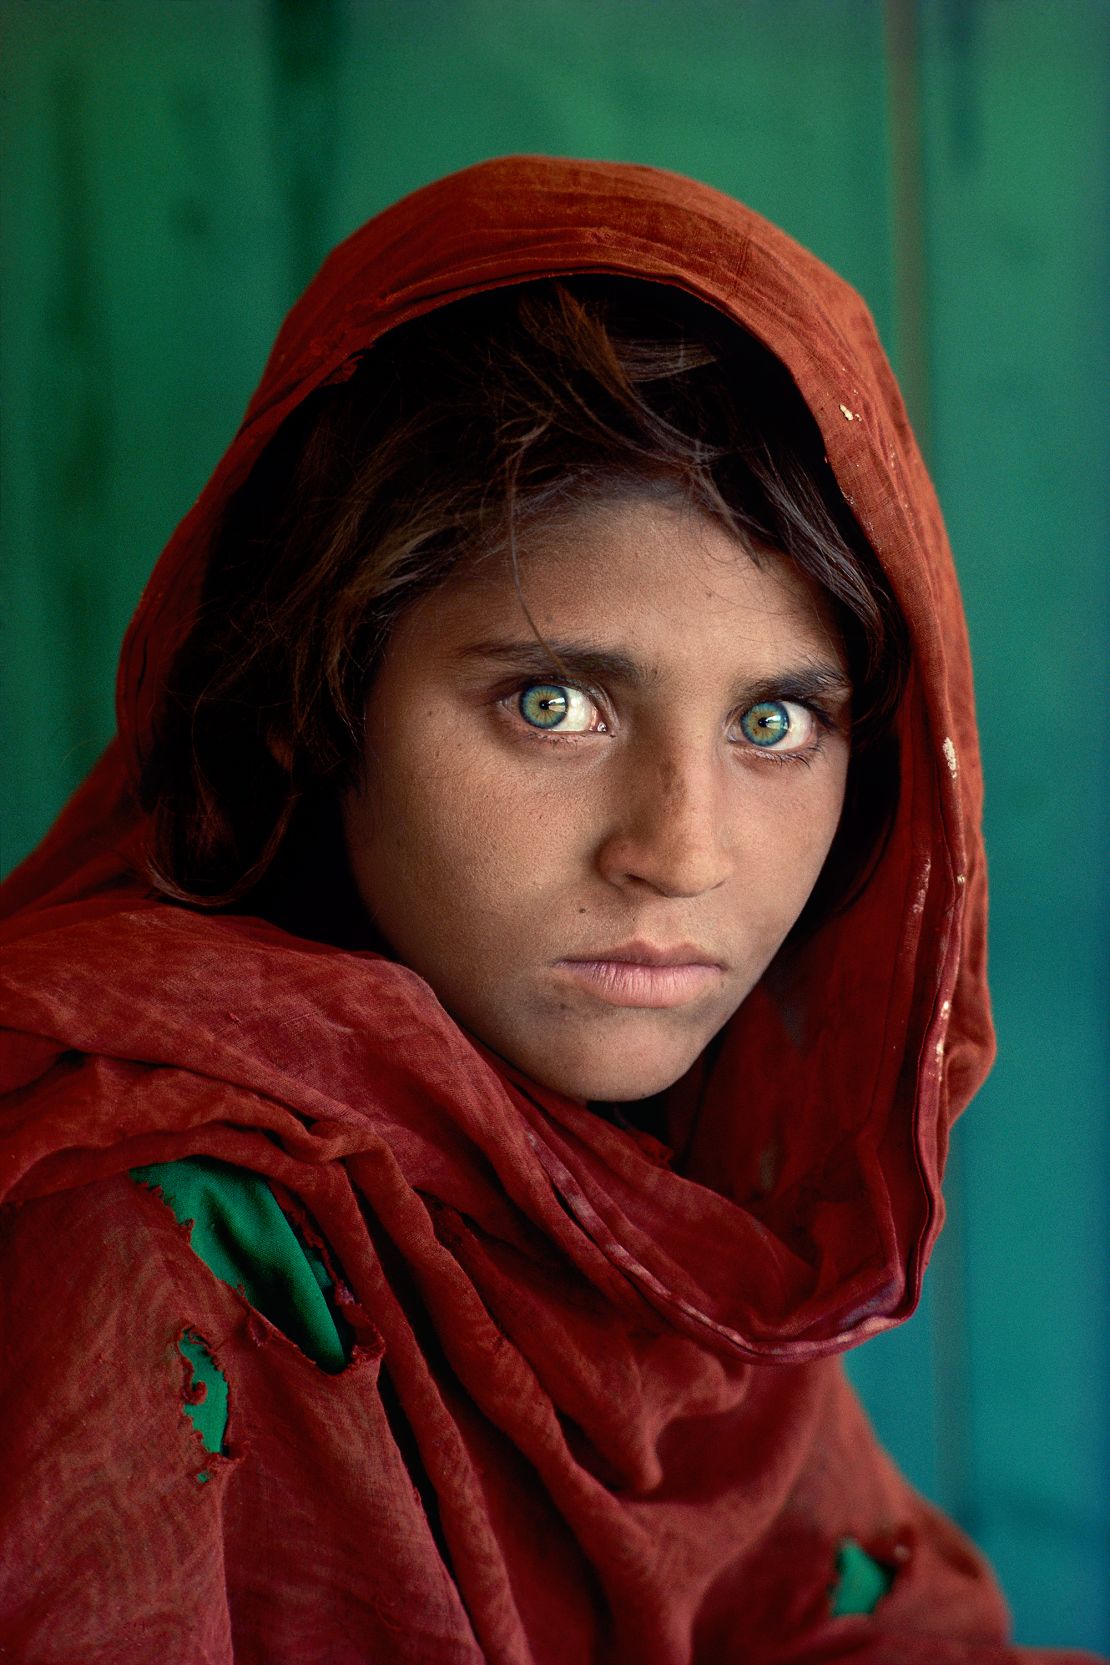 Original "Afghan Girl" Photo taken by Steve McCurry.